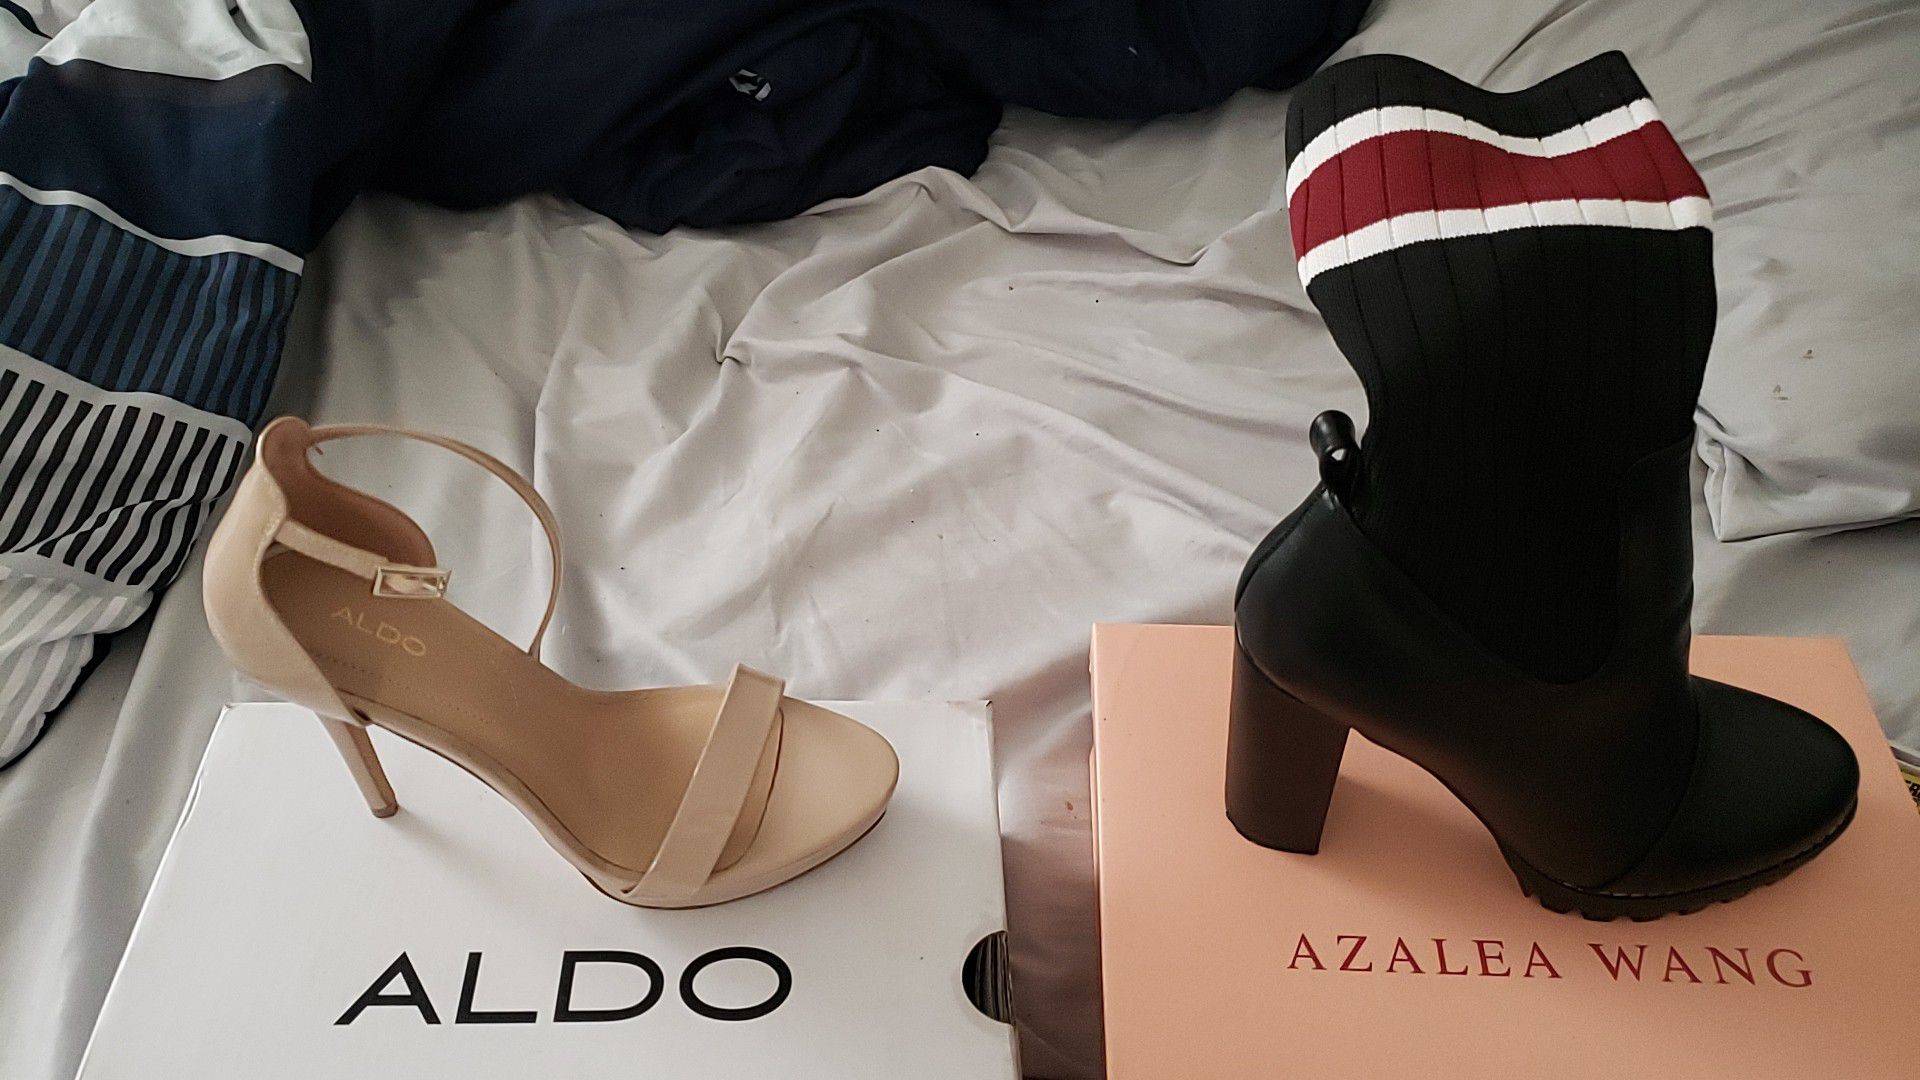 Aldo high heels 7.5 and Azalewang High heel Boots 7.5 brand new in box!